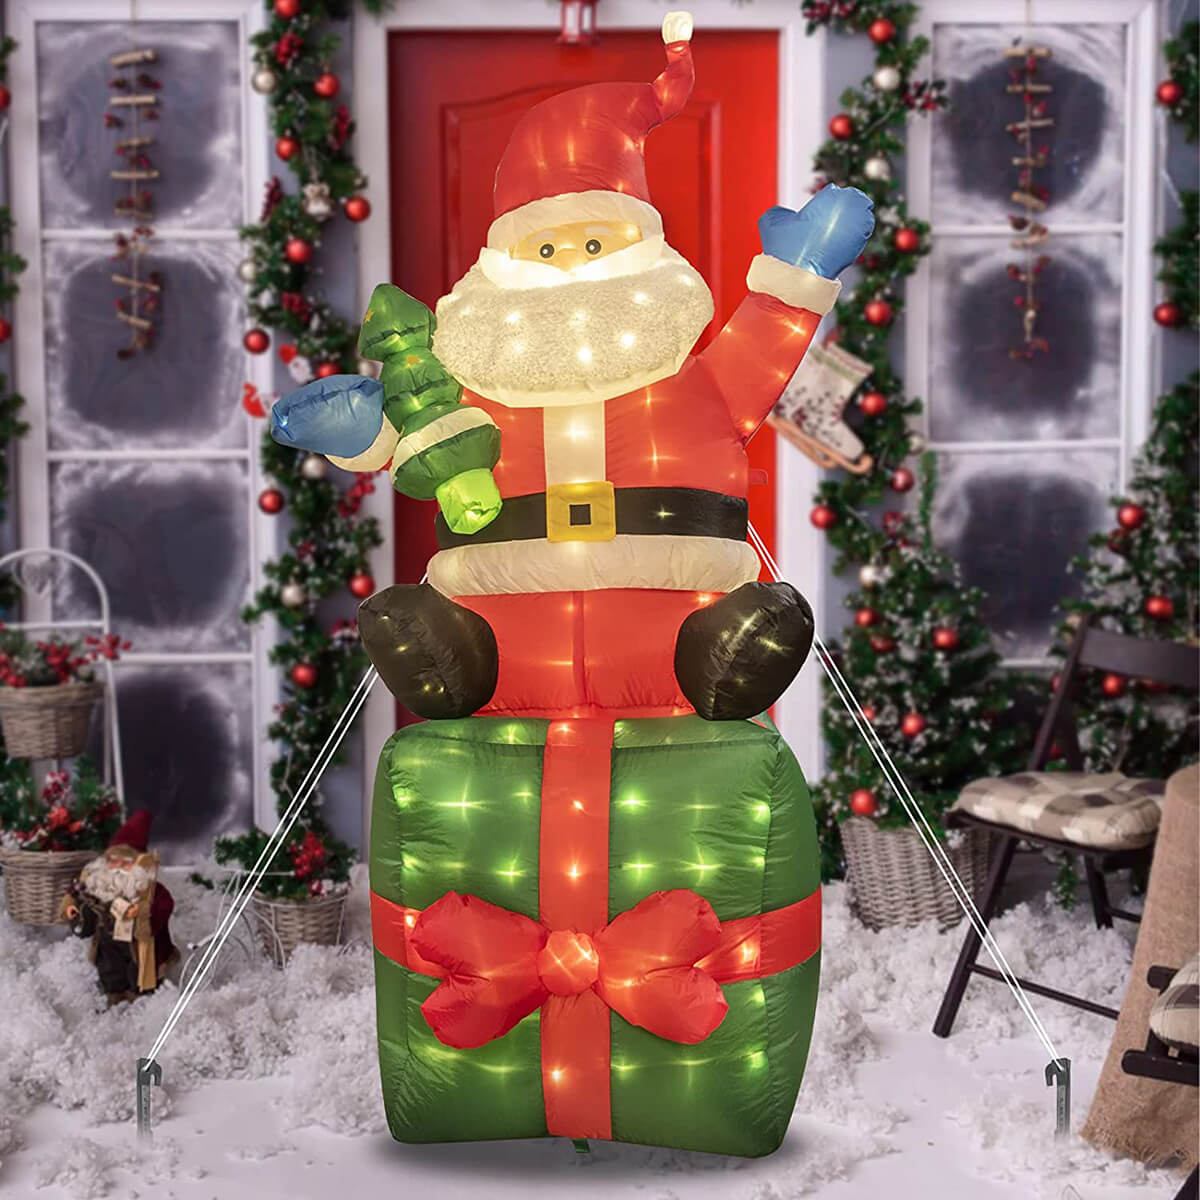 Santa Sitting on a Christmas Present Inflatable